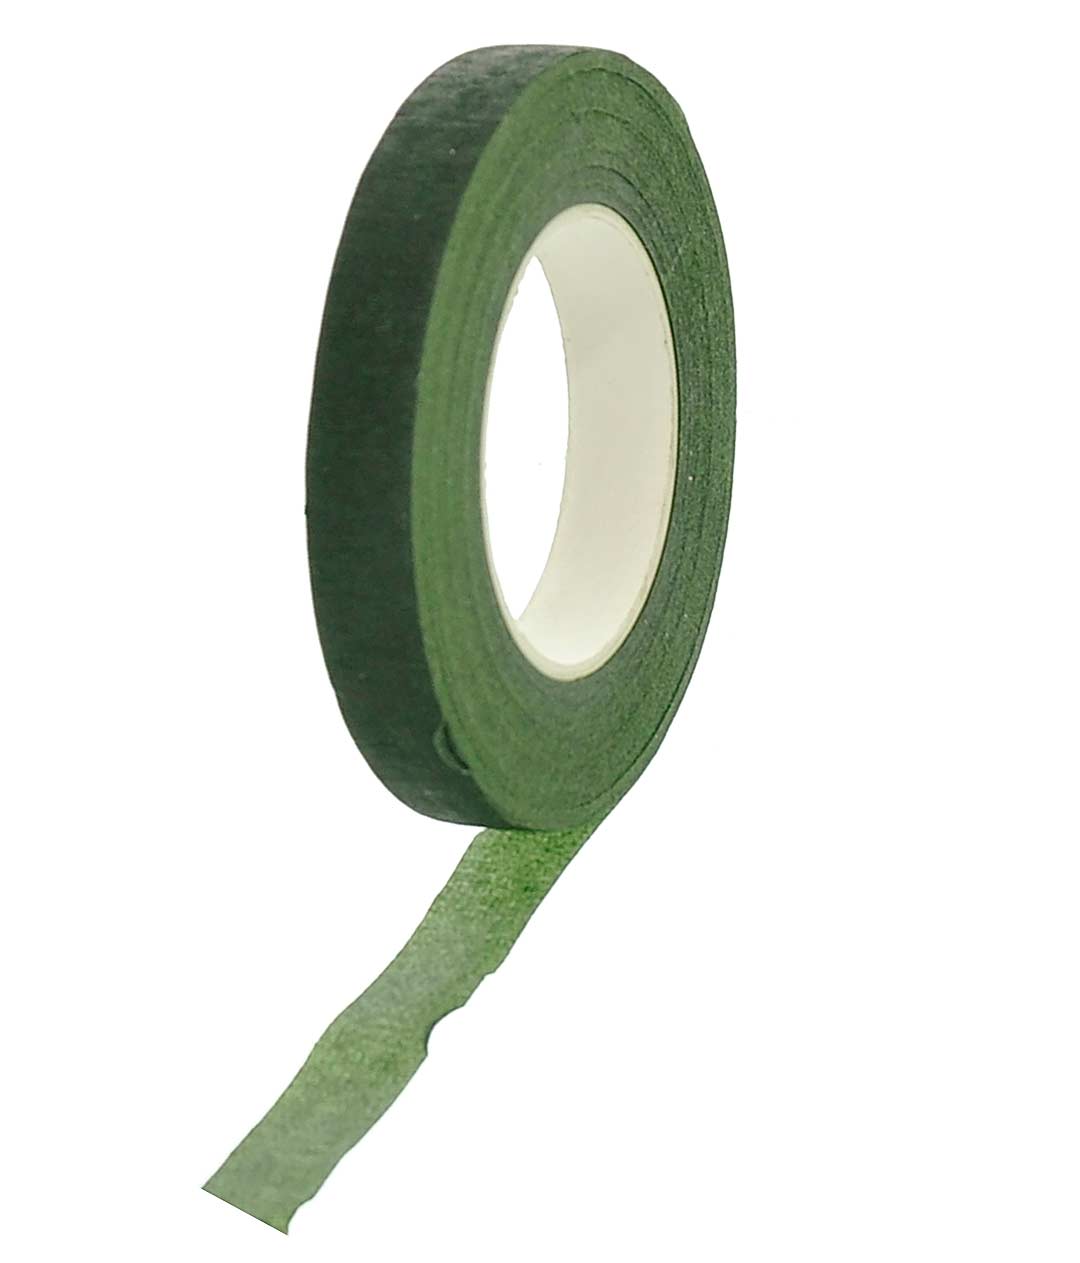 Изображение Тейп-лента зеленый мох